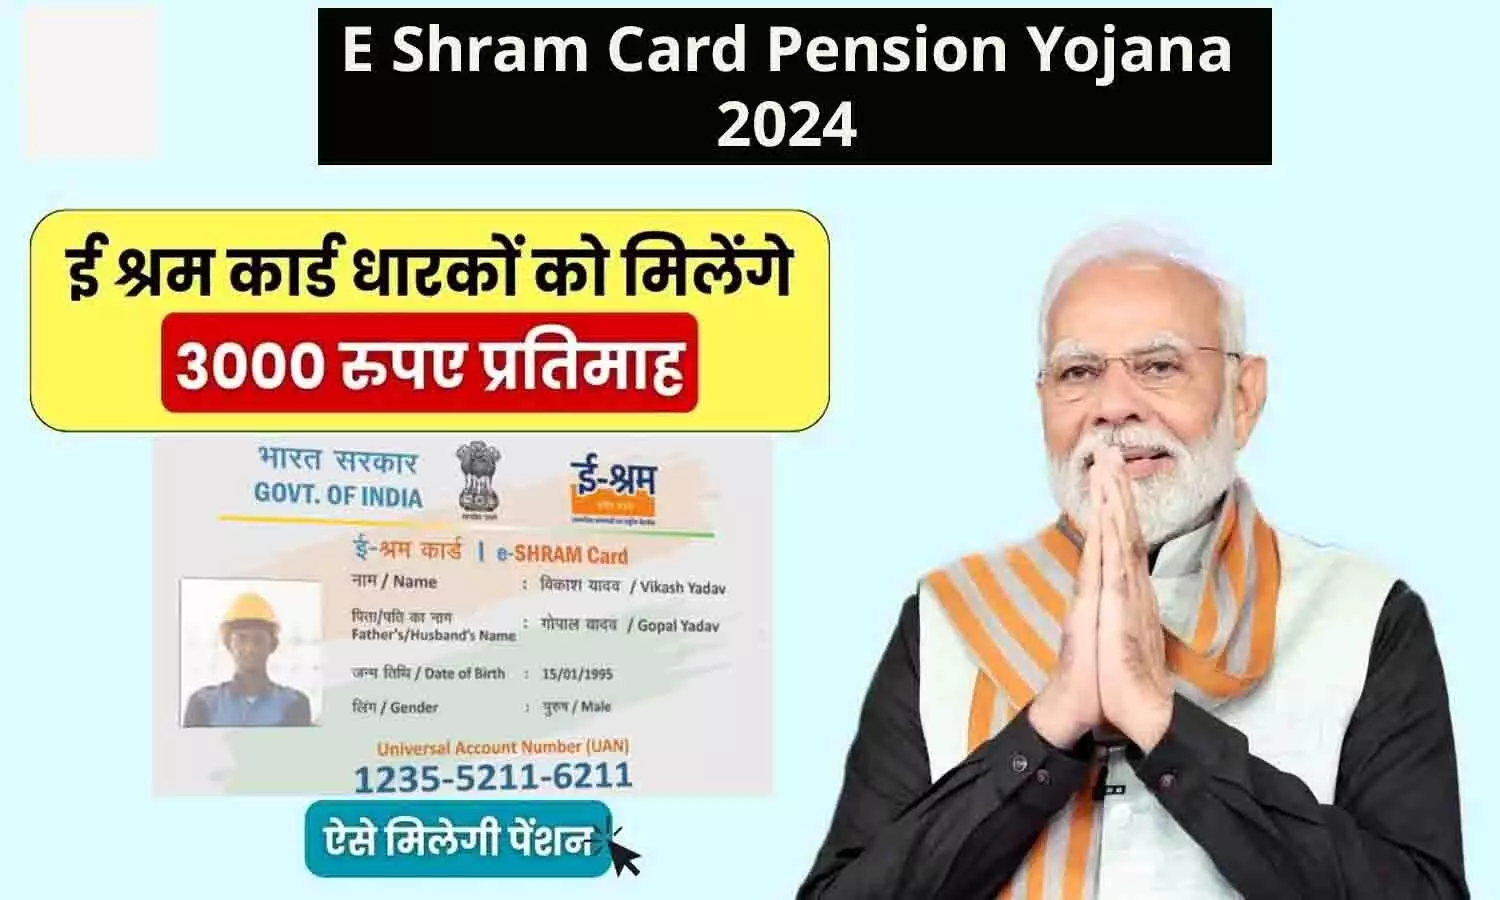 E Shram Card Pension Yojana 2024: बड़ा ऐलान! सभी को मिलेगा प्रतिमाह ₹3000 पेंशन..